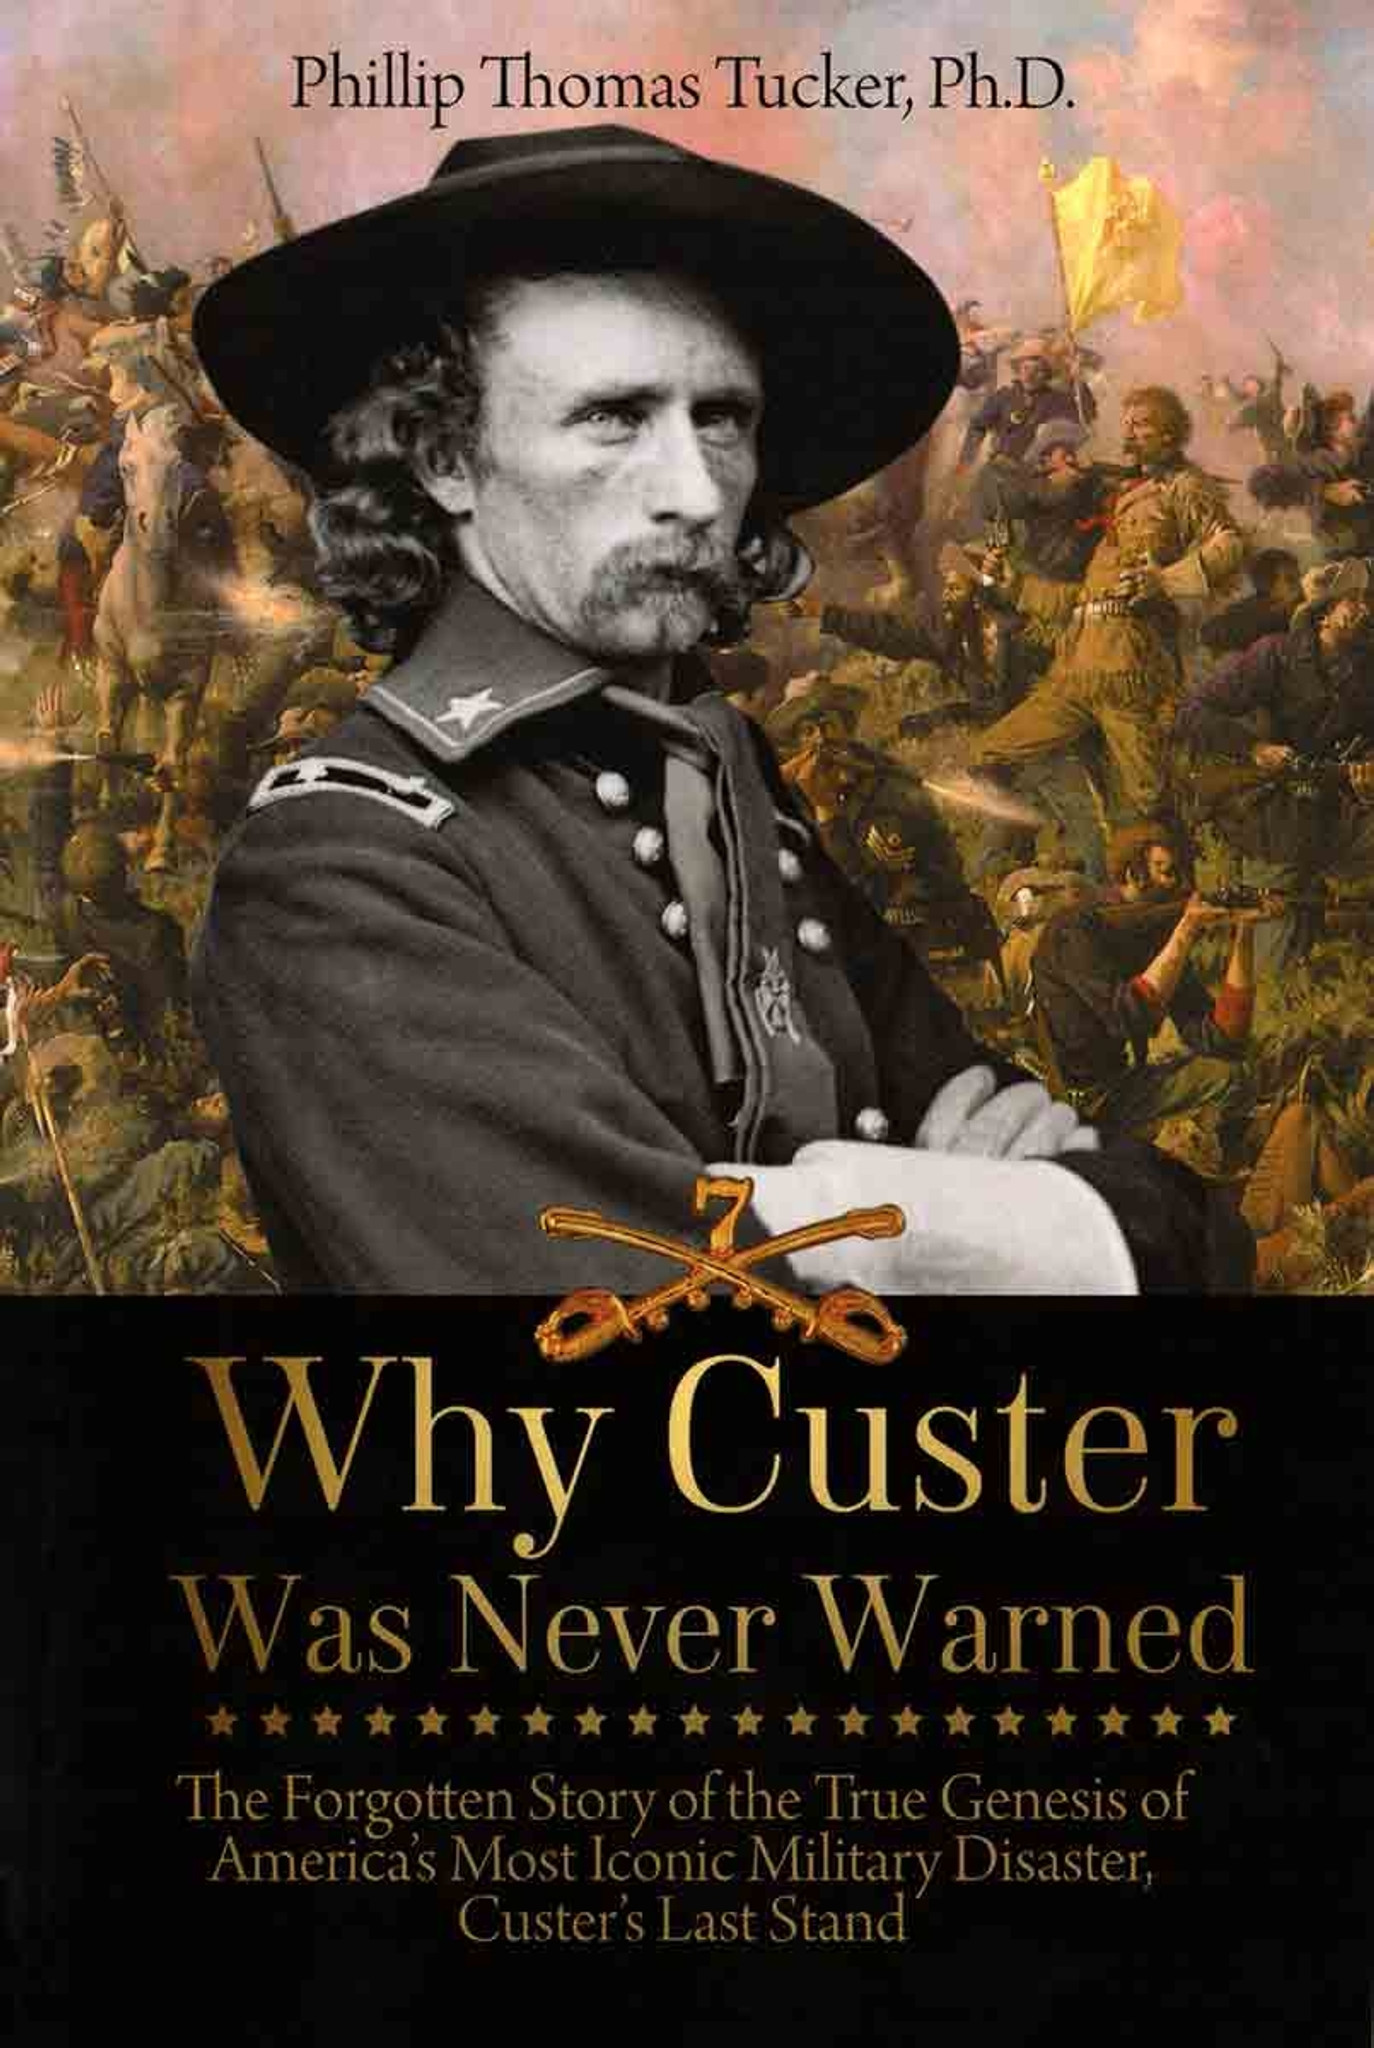 Custer перевод. True Genesis.